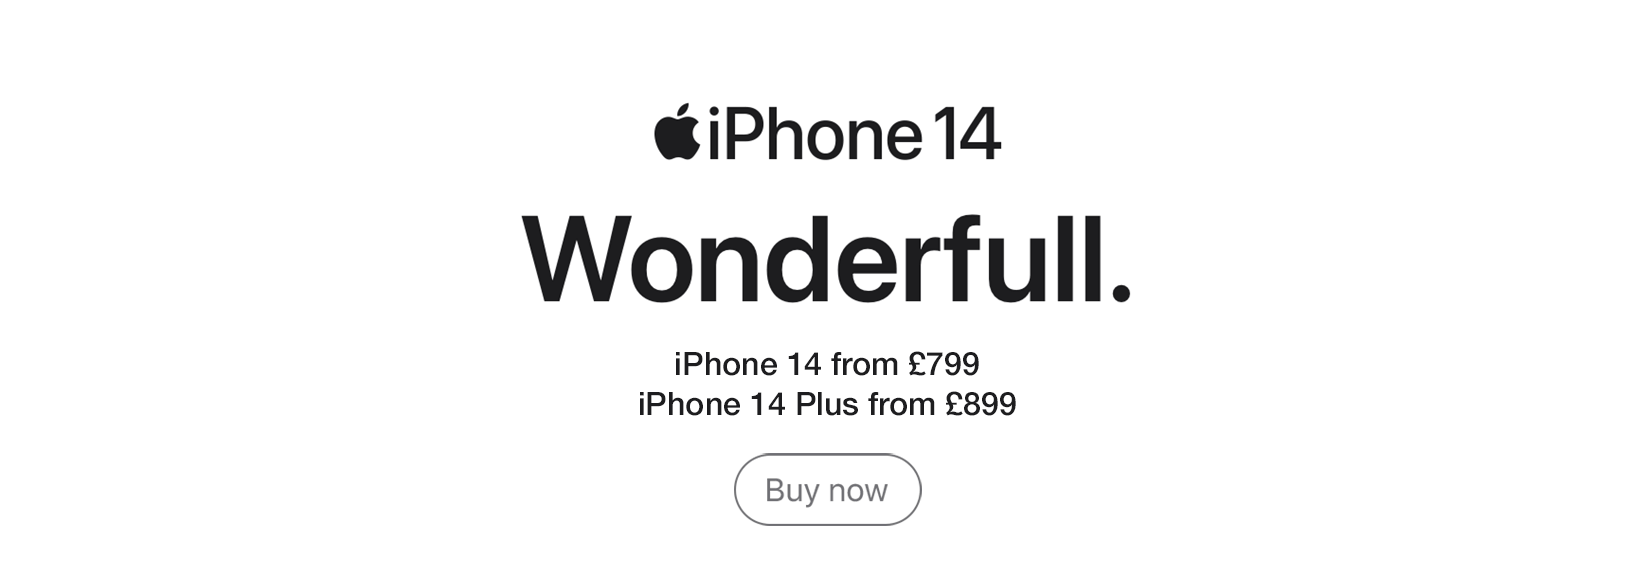 iPhone 14. Wonderfull.